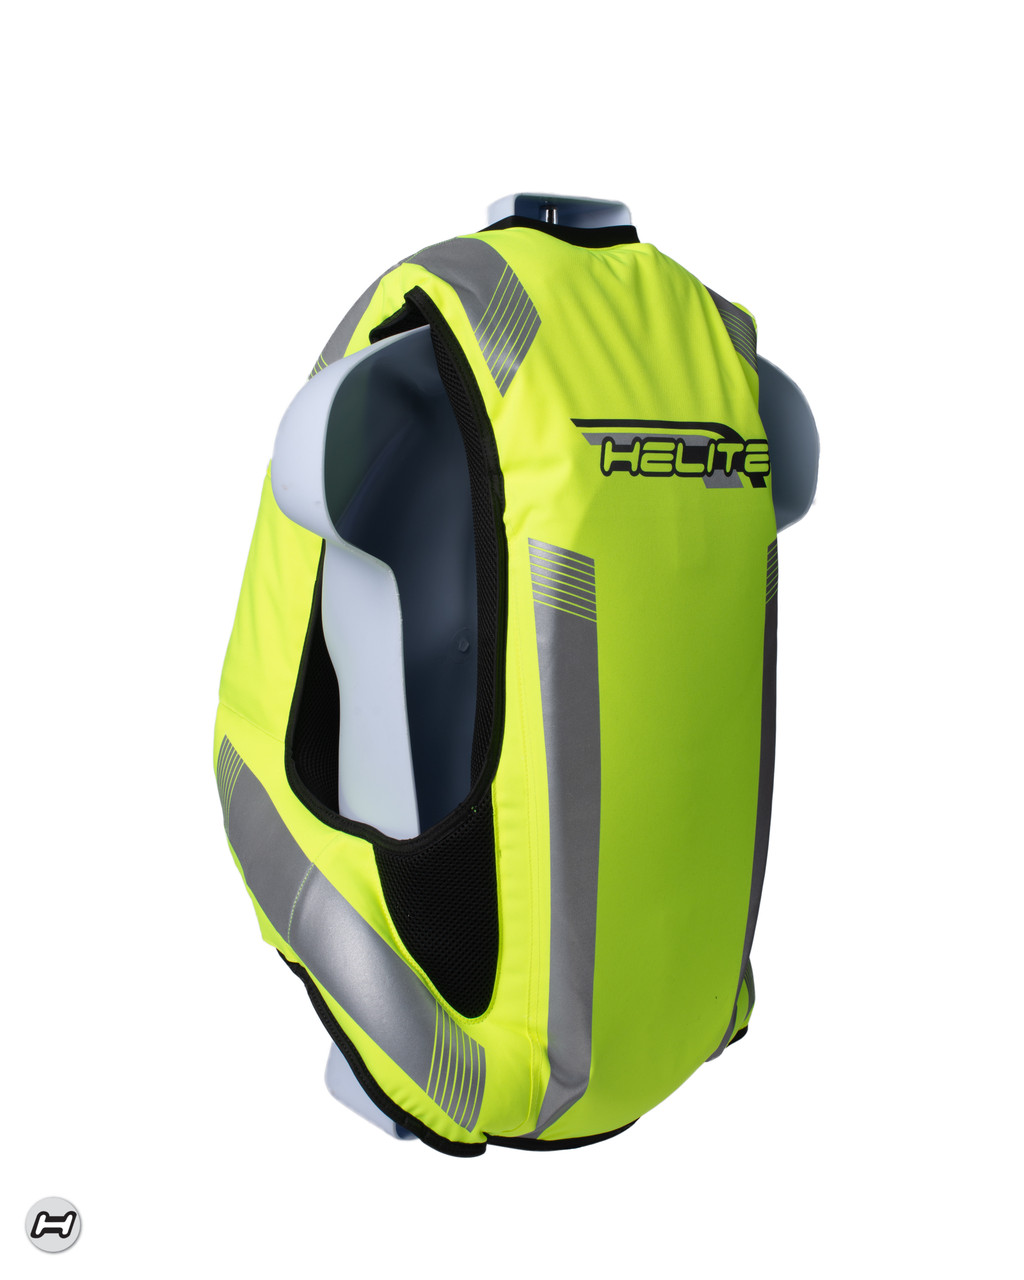 Helite Hi-Viz Airbag Vest Turtle 2 Technology